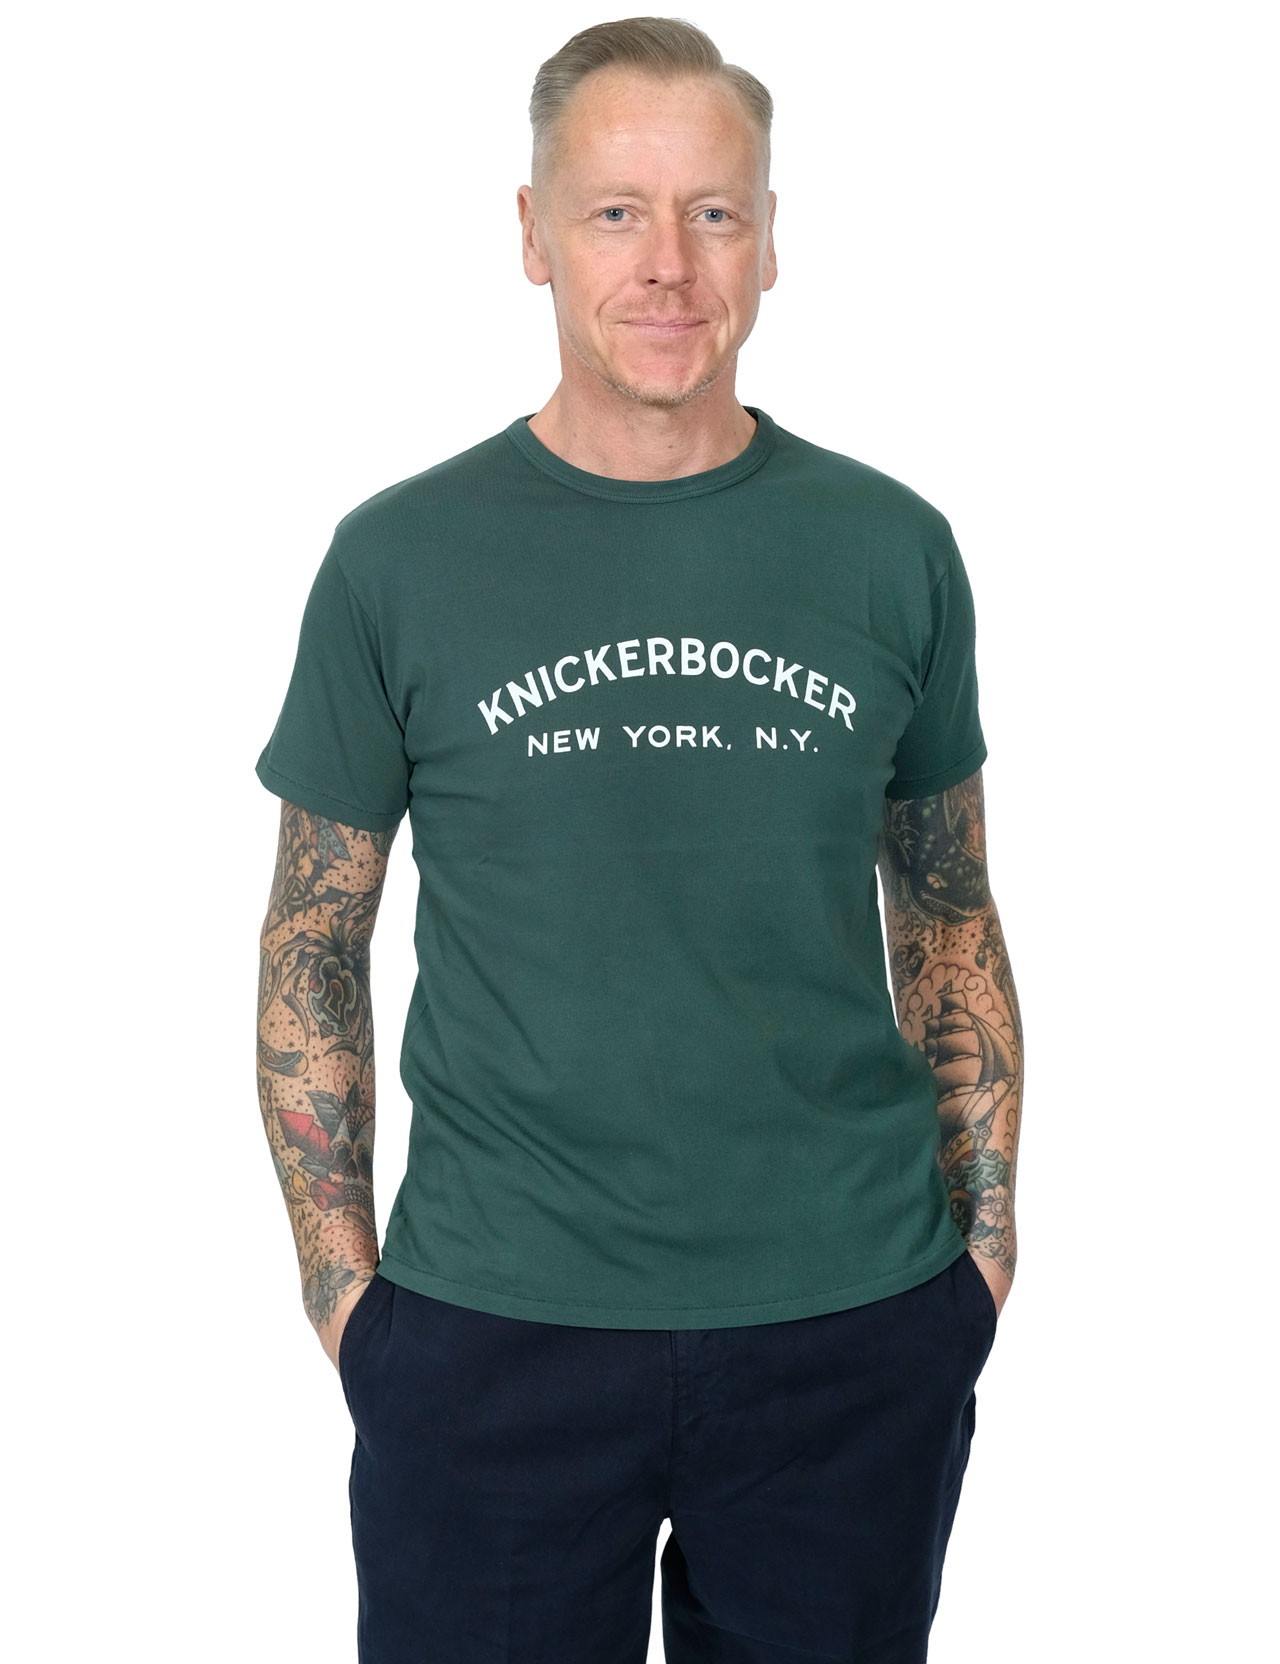 Knickerbocker - Core Logo T-Shirt - Green